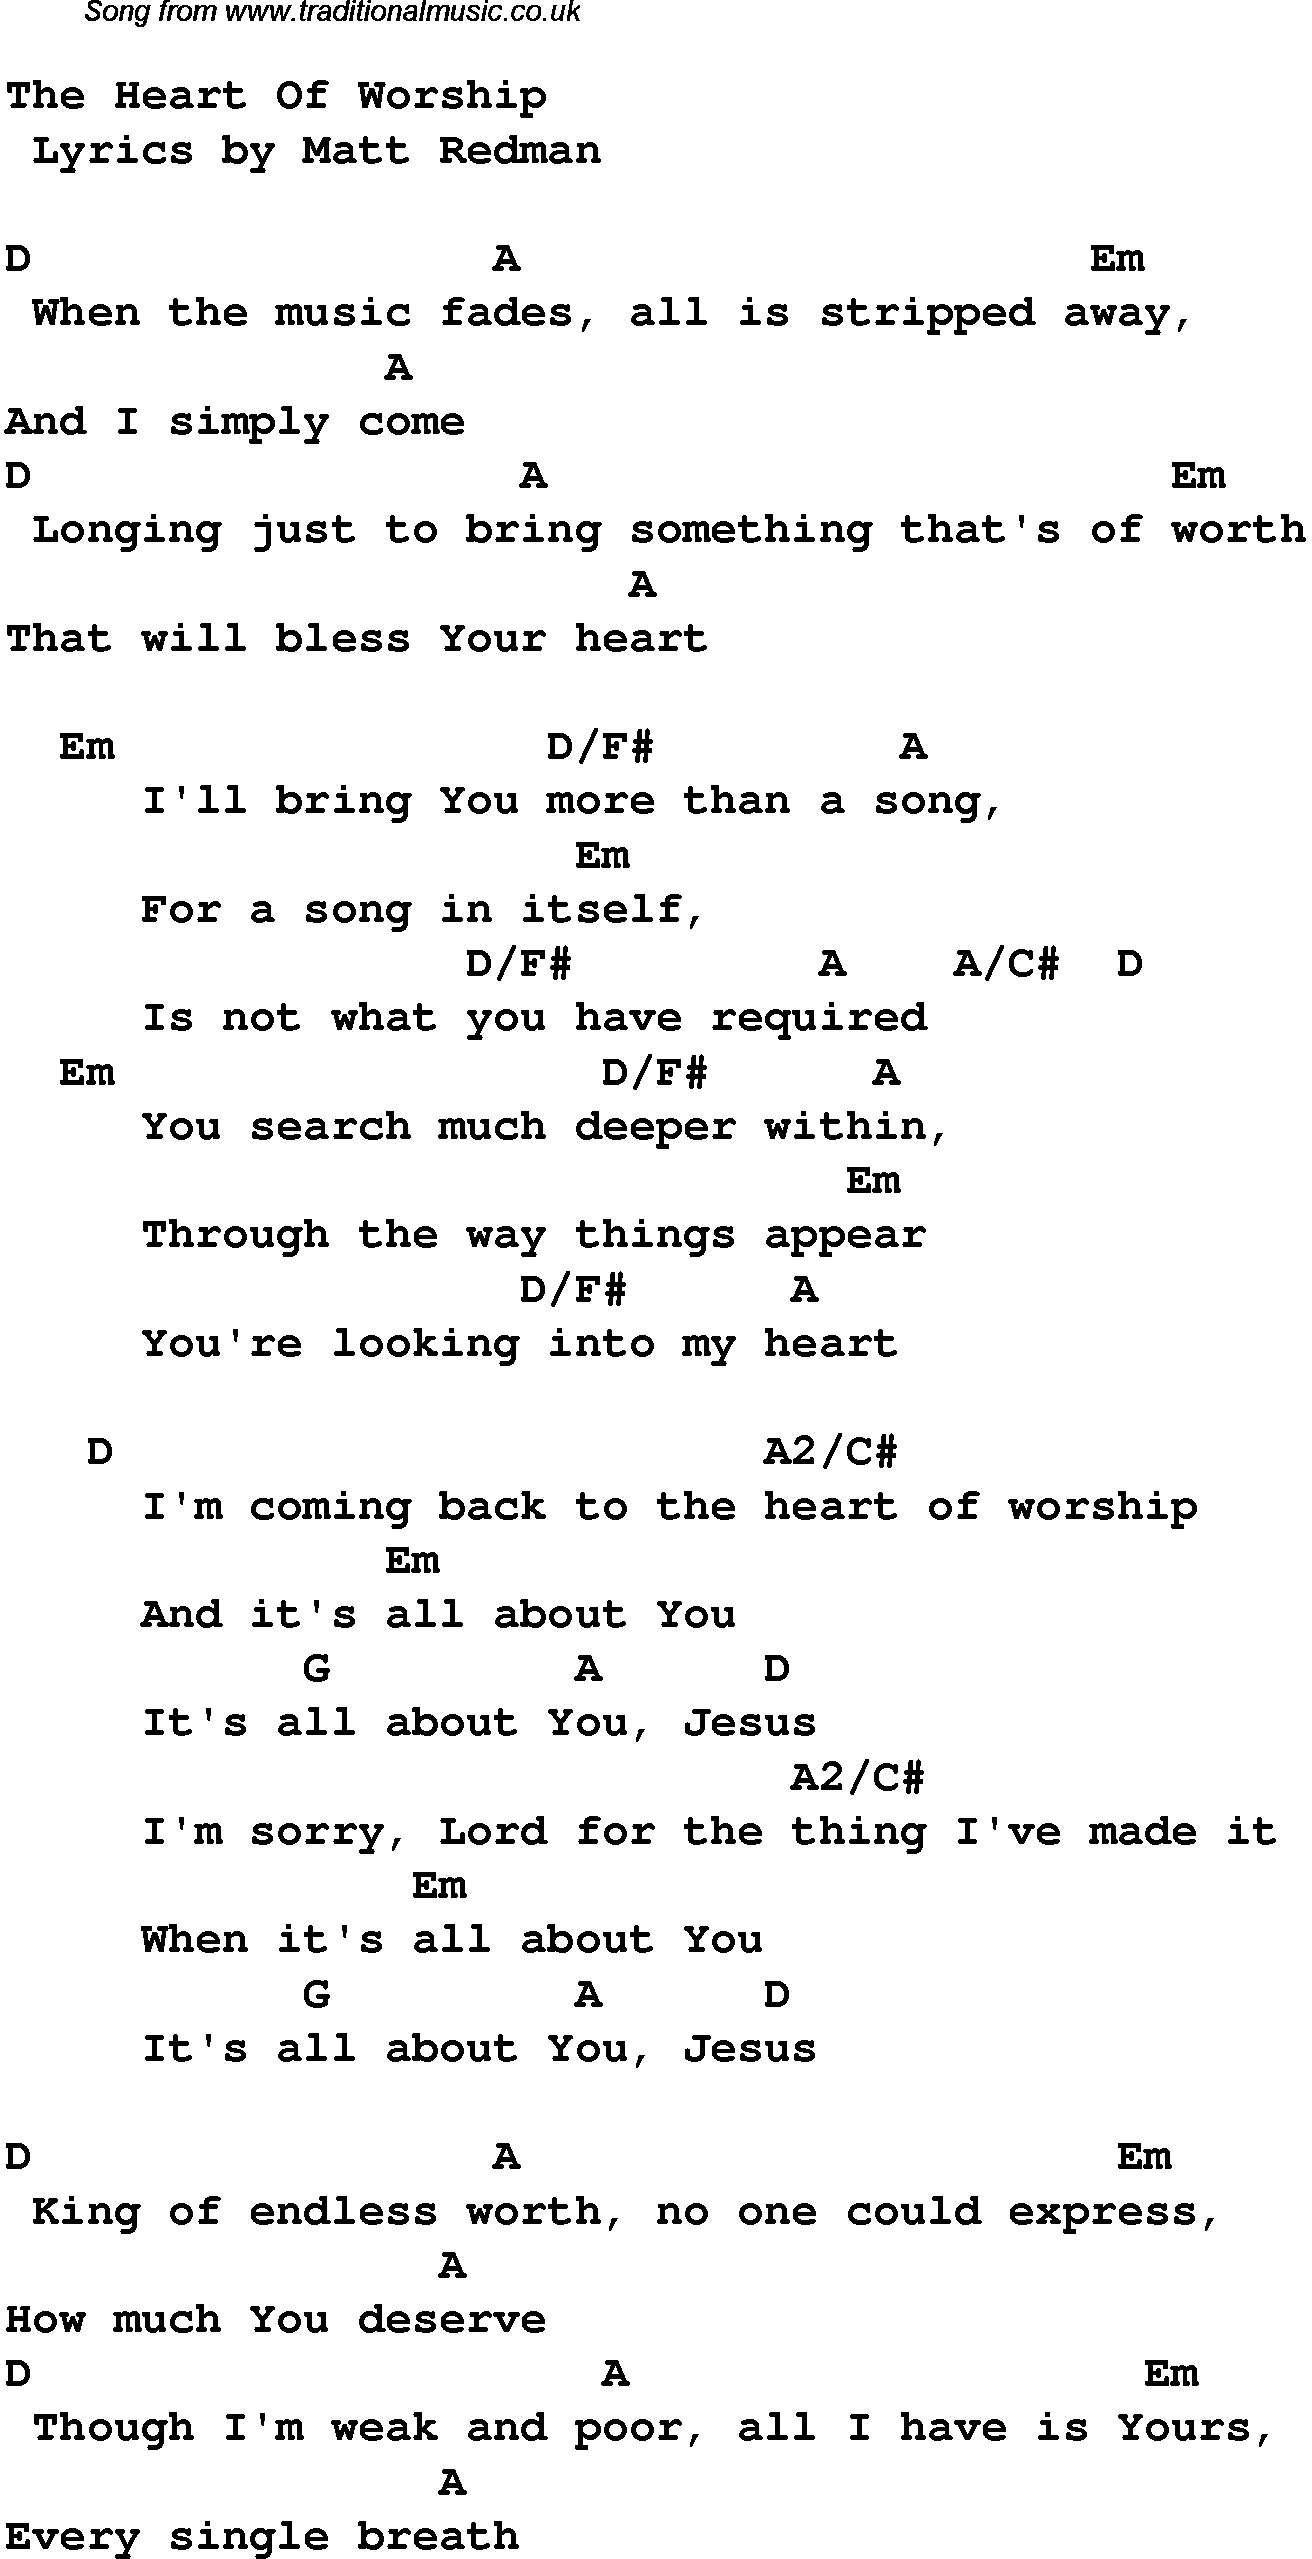 Christian songs lyrics with guitar chords